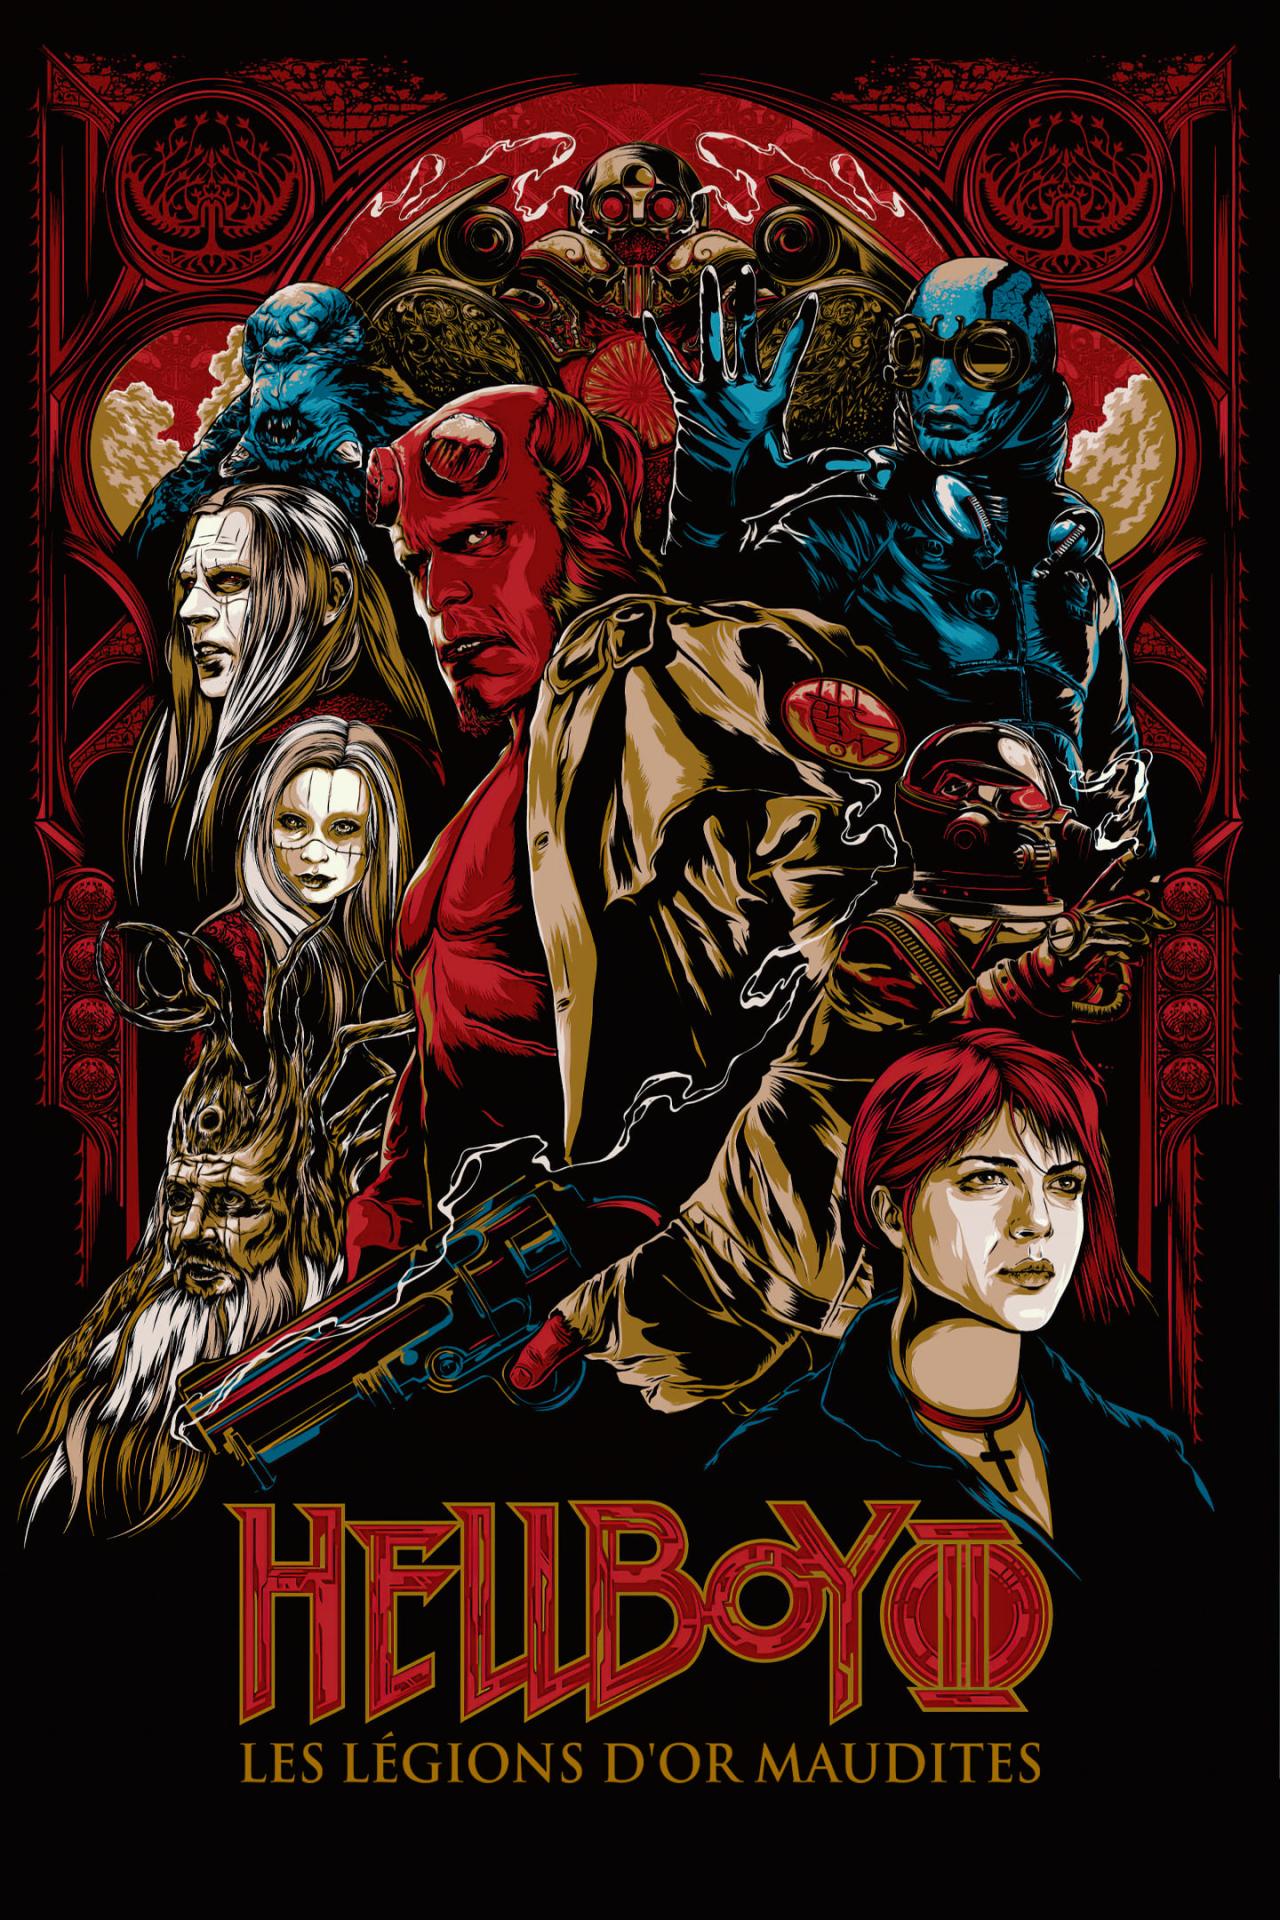 Affiche du film Hellboy II : Les Légions d'or maudites poster